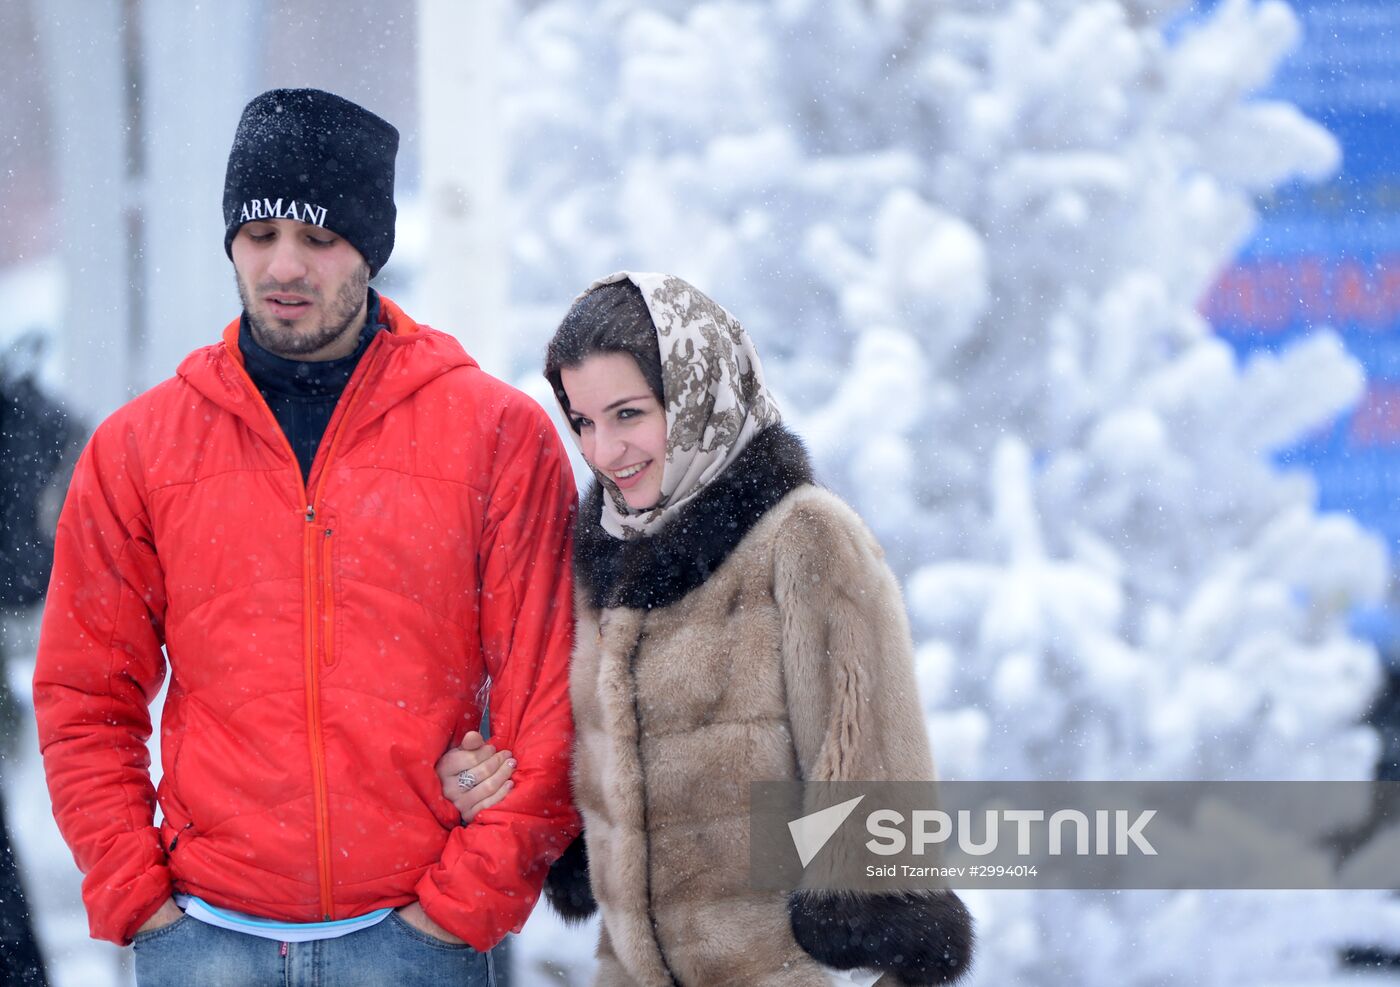 Winter in Grozny